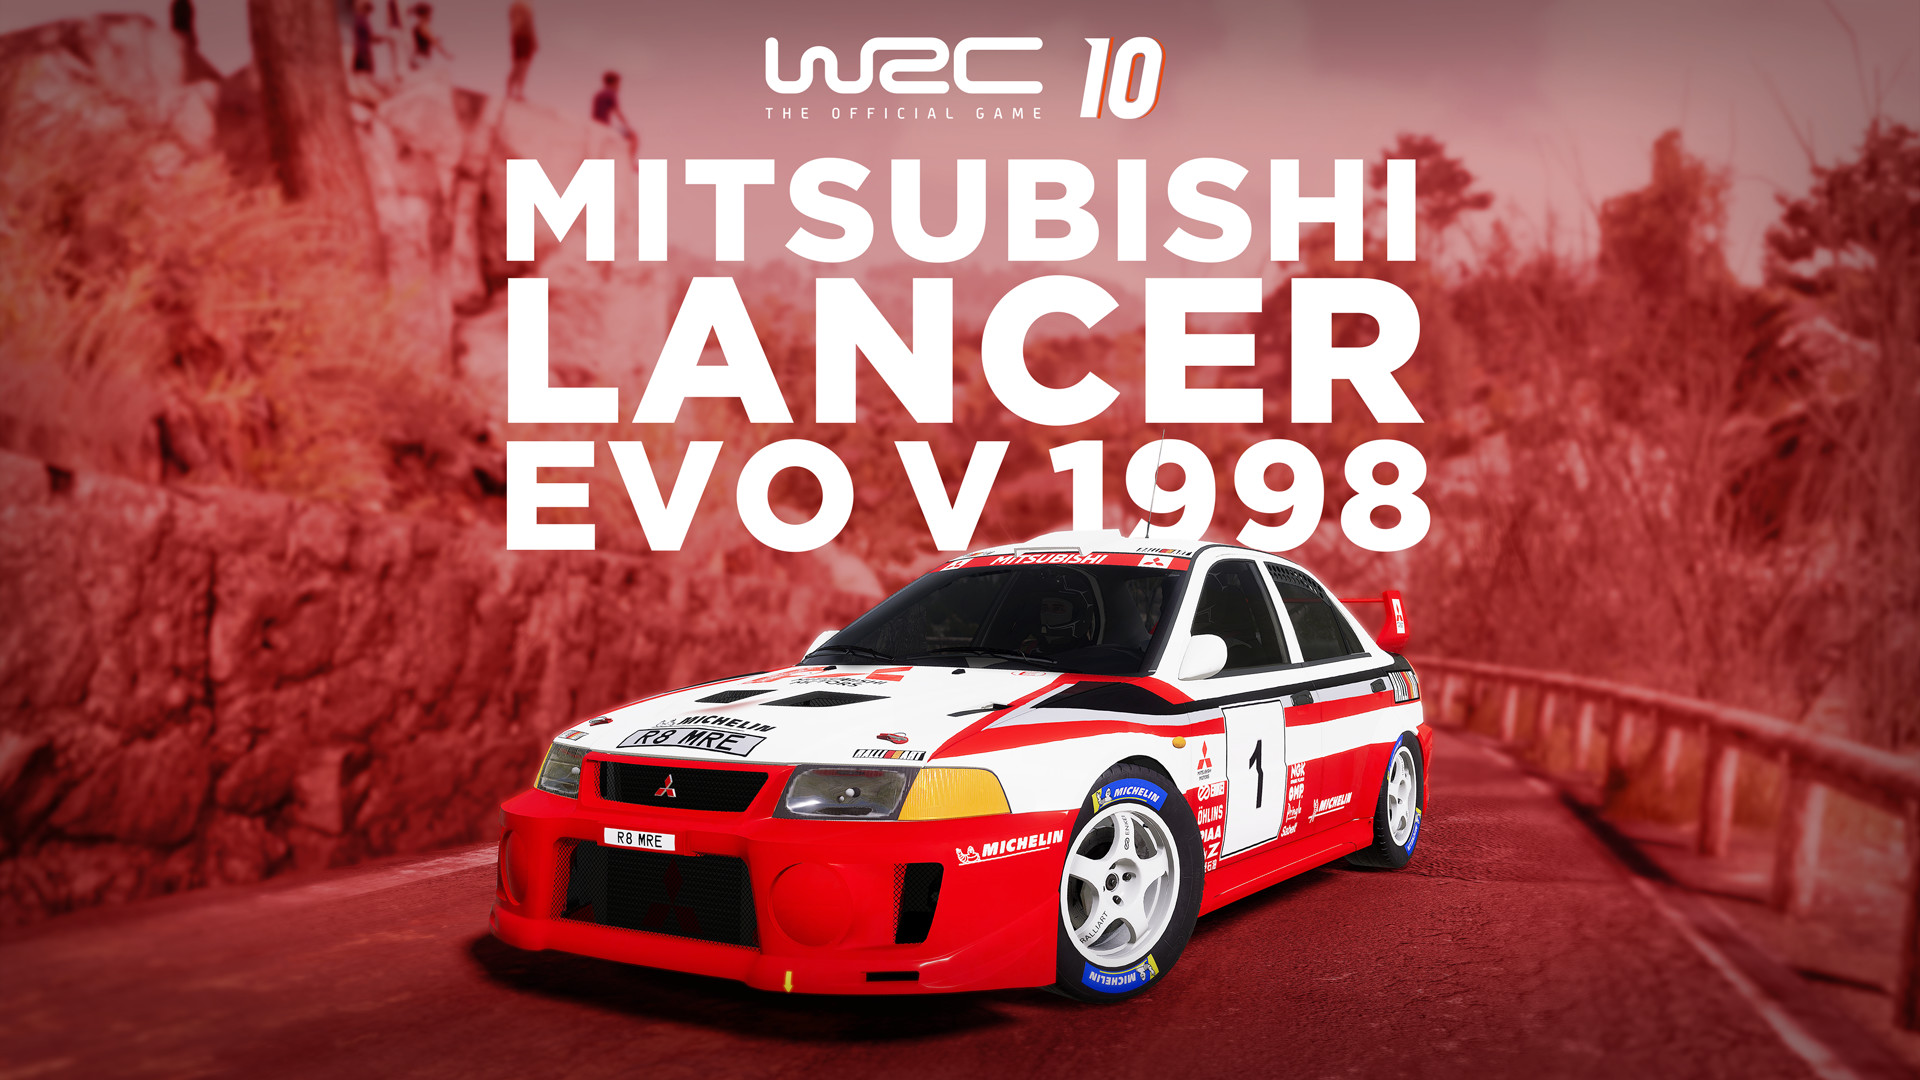 WRC 10 Mitsubishi Lancer Evo V 1998 Featured Screenshot #1